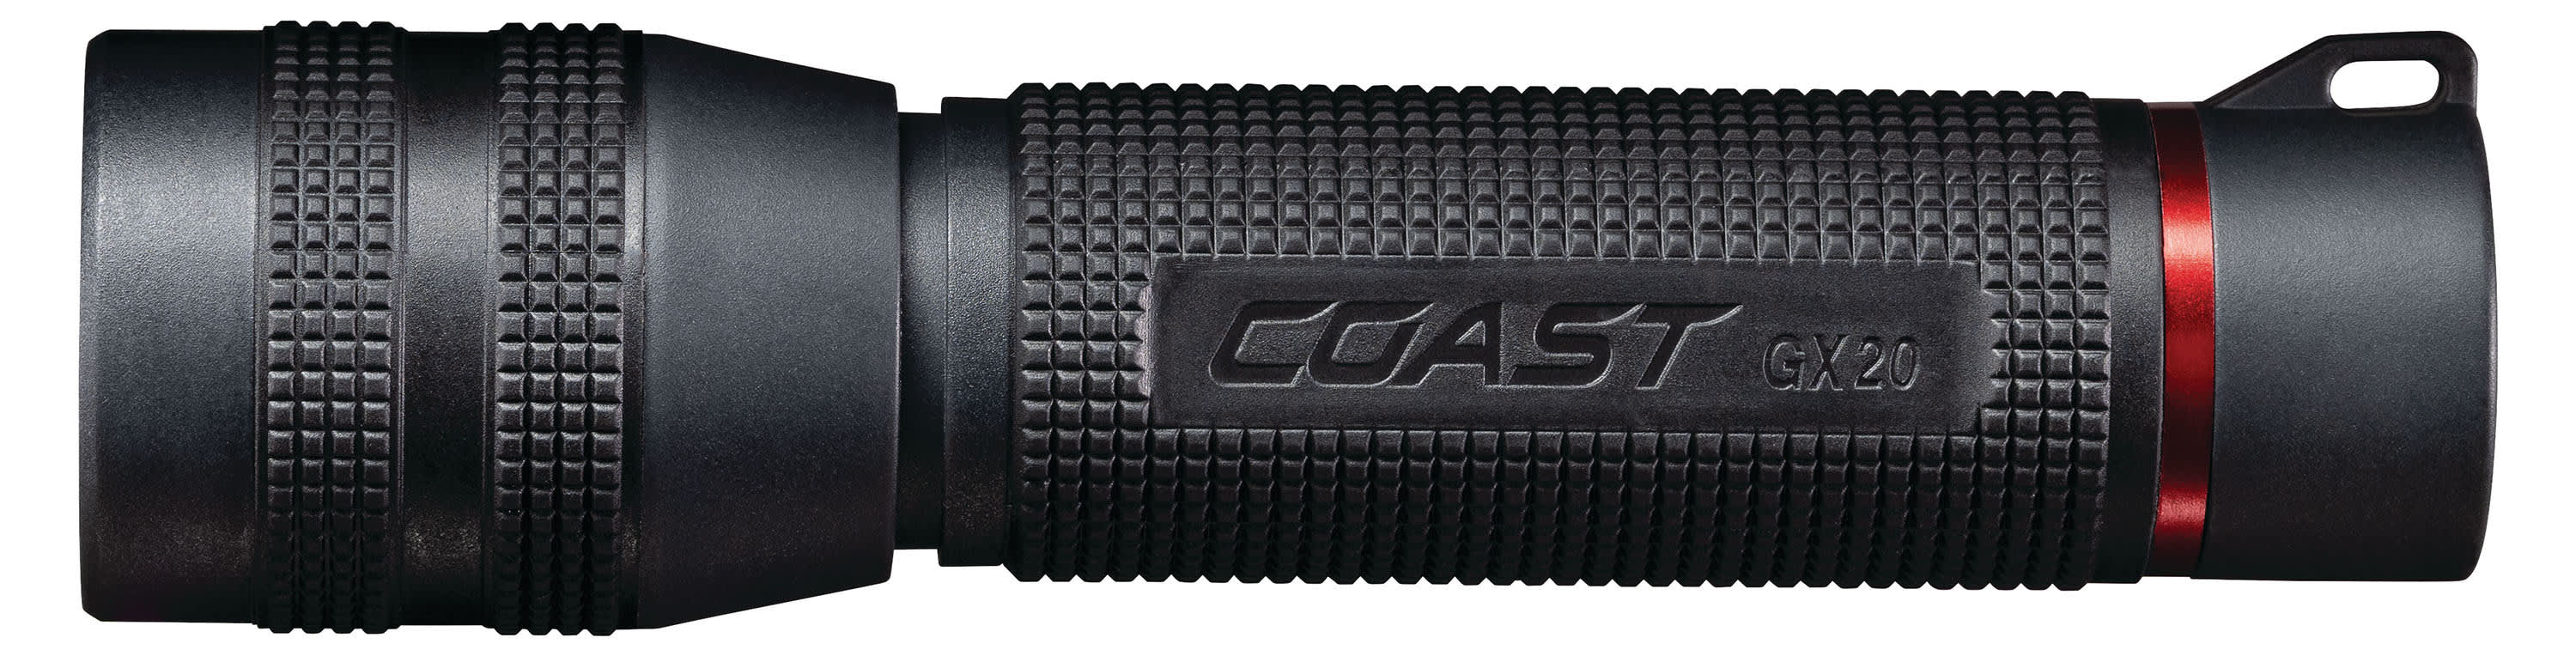 Coast GX20 Flashlight